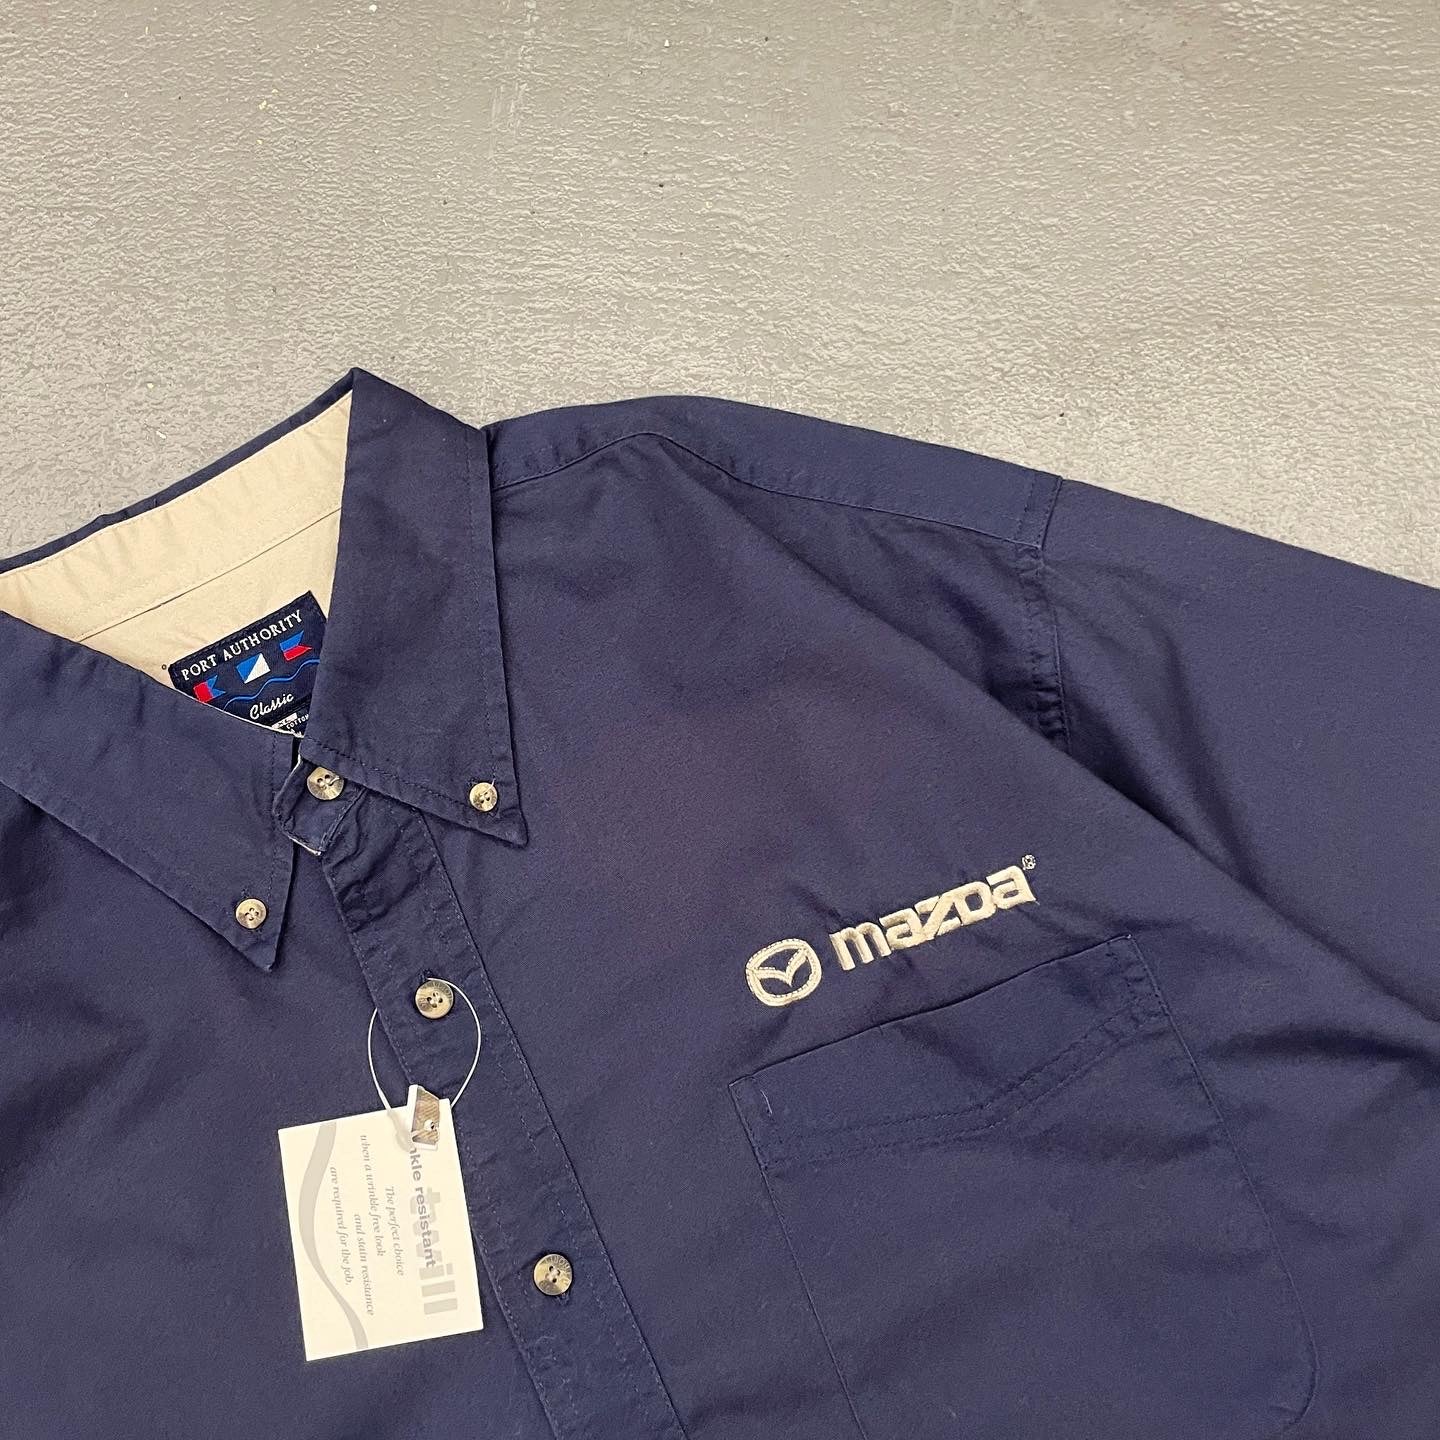 MAZDA USA Employees L/S Shirt